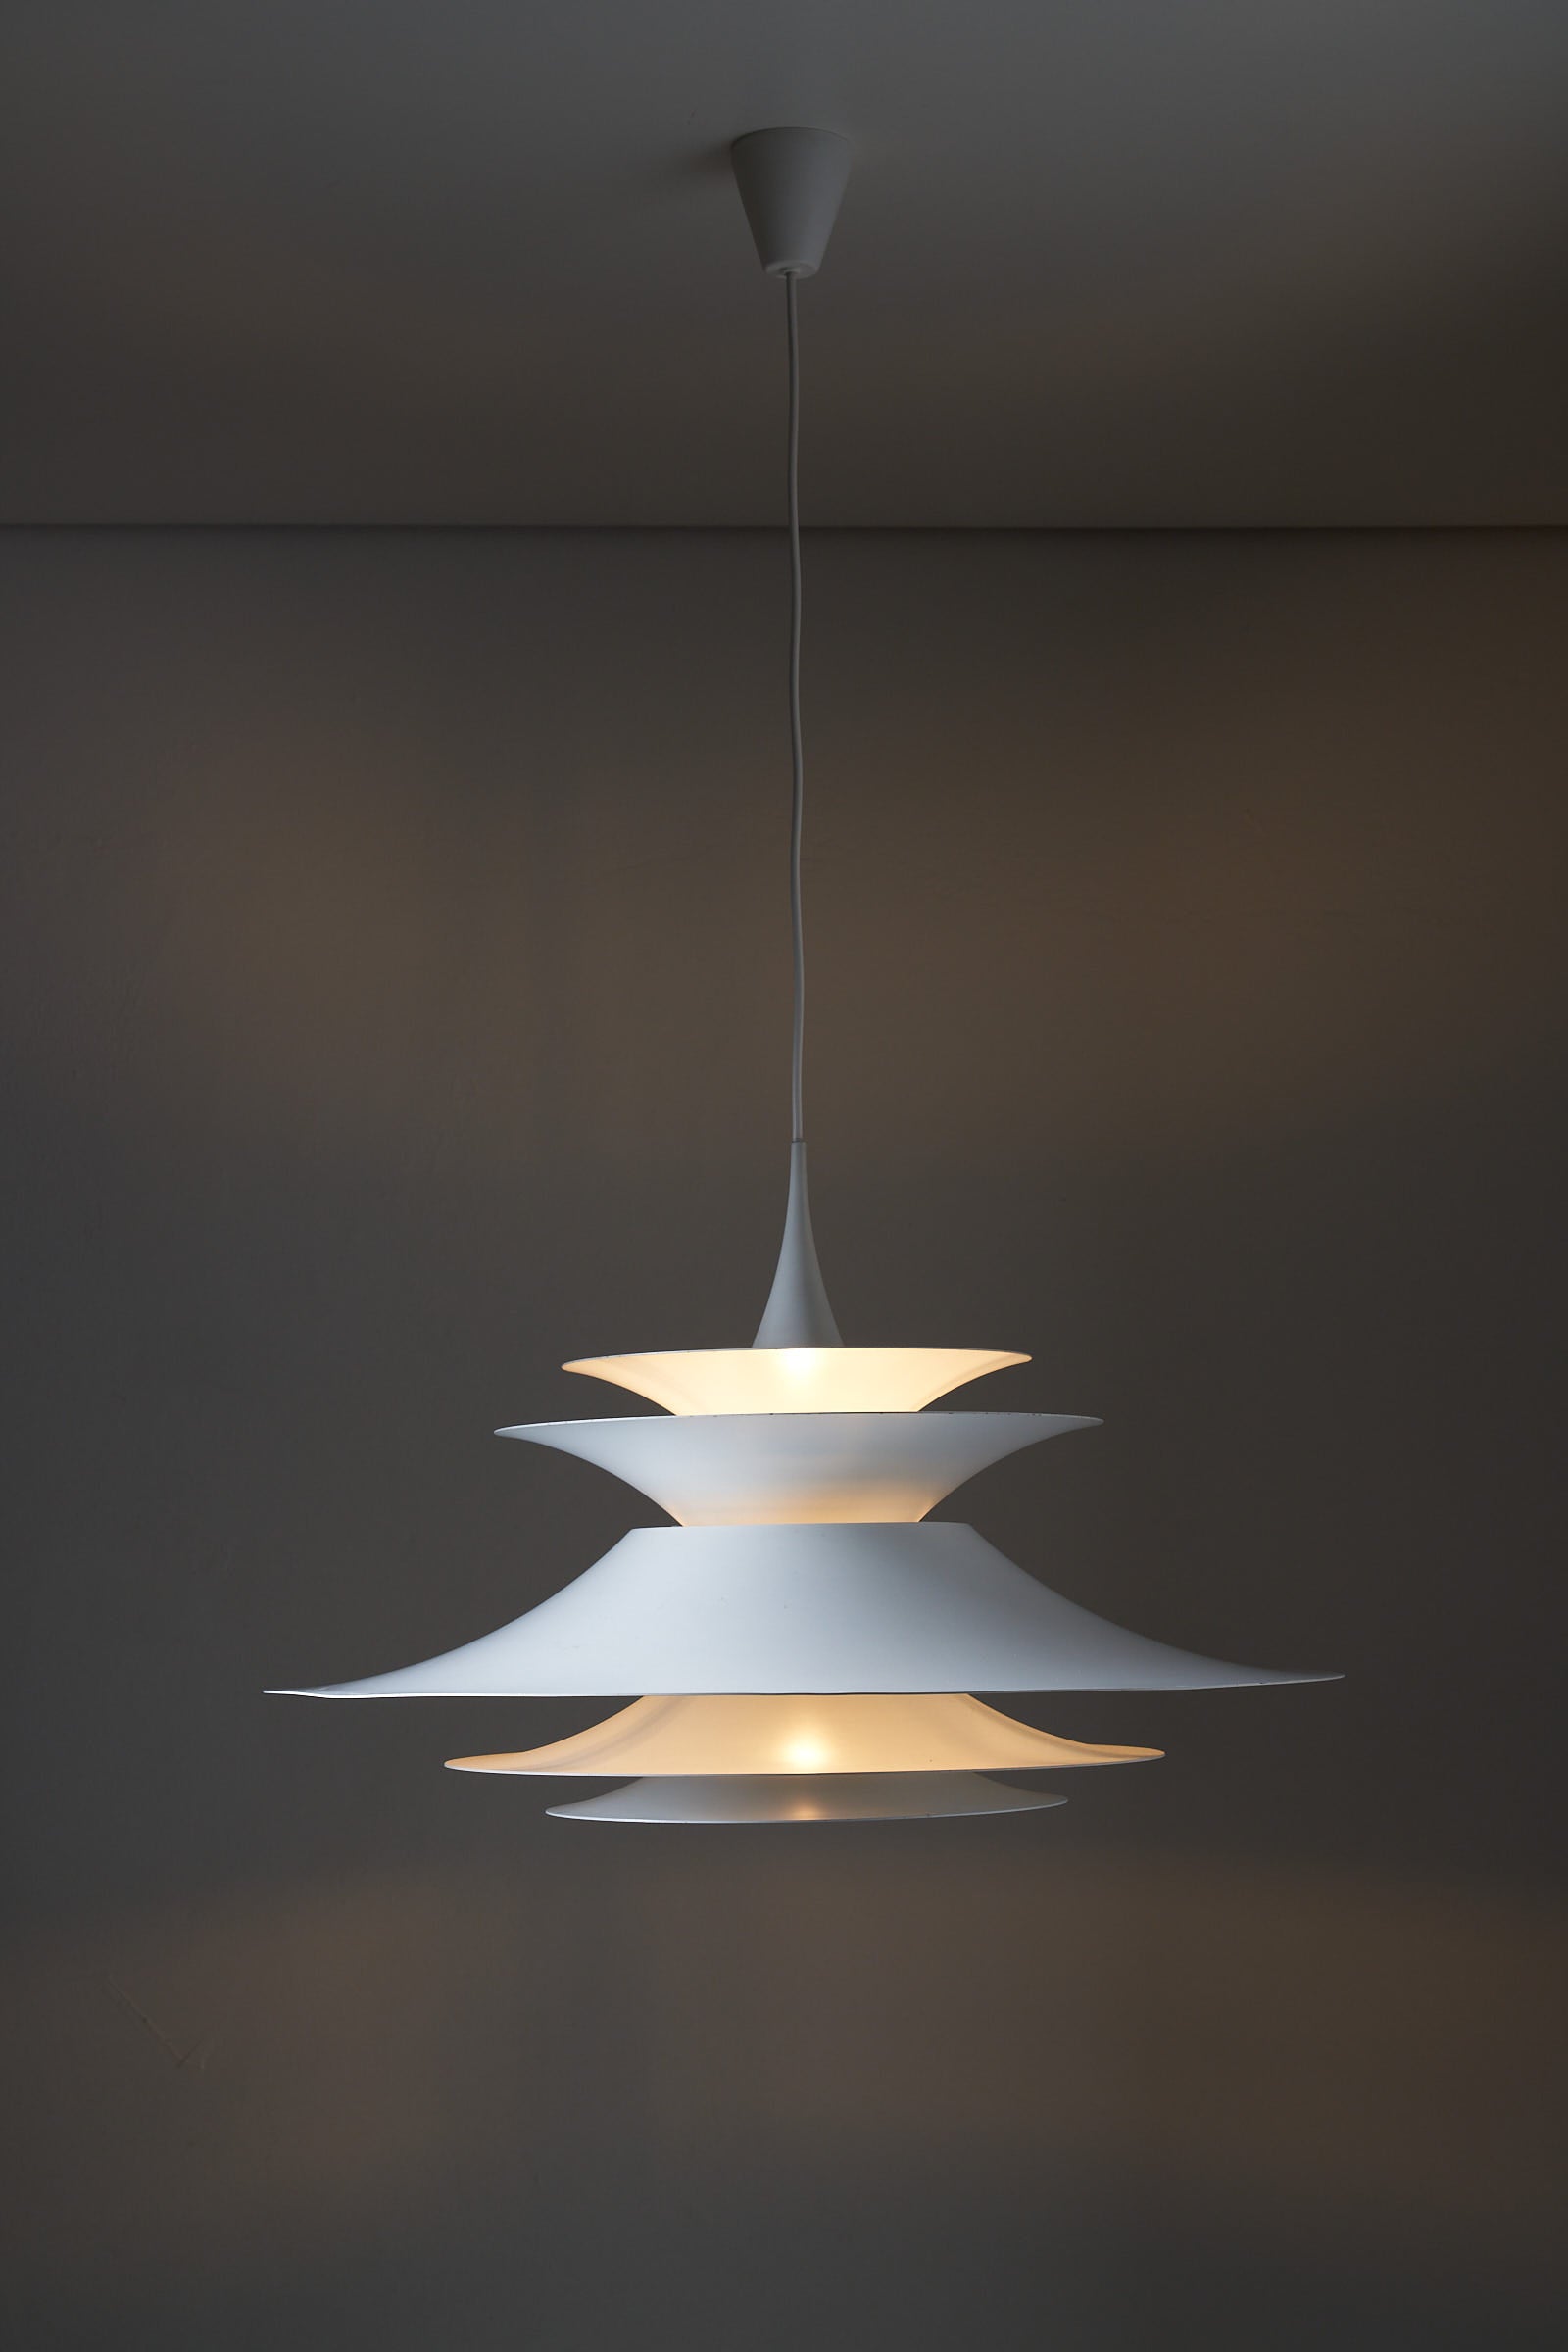 Radius lamp by Erik Balslev for Fog and Morup